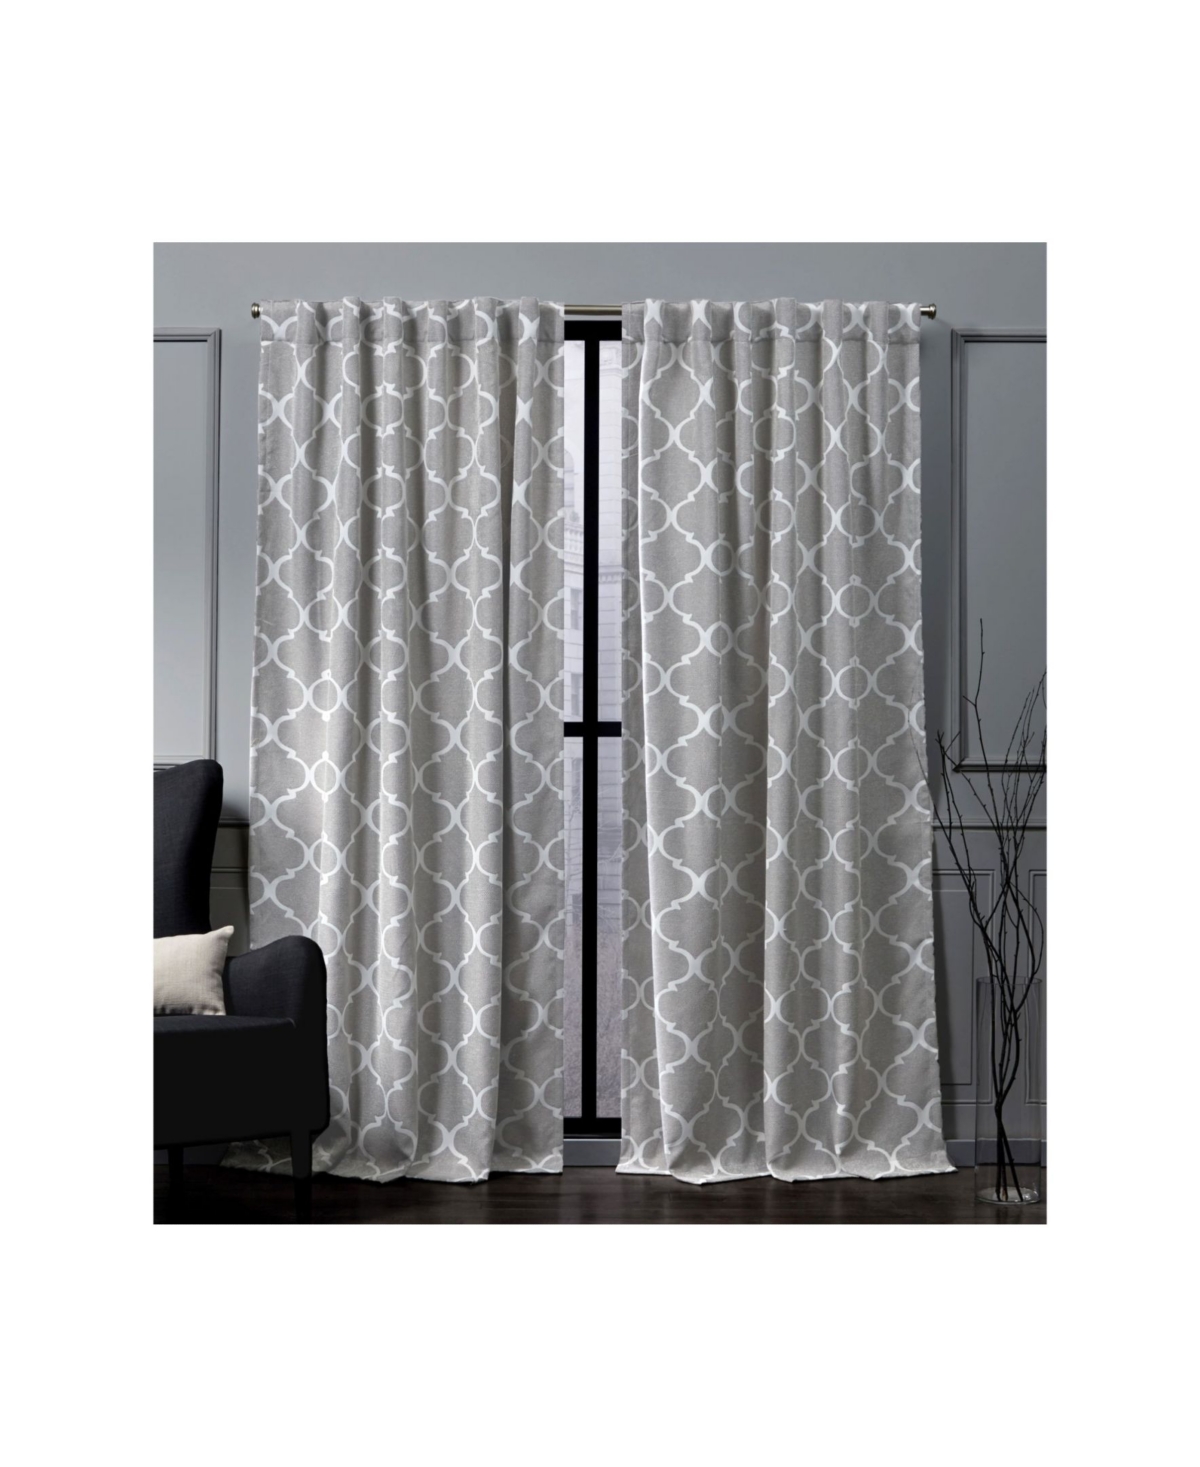 Exclusive Home Treillage Woven Blackout Hidden Tab Top 52" X 84" Curtain Panel Pair In Medium Gre